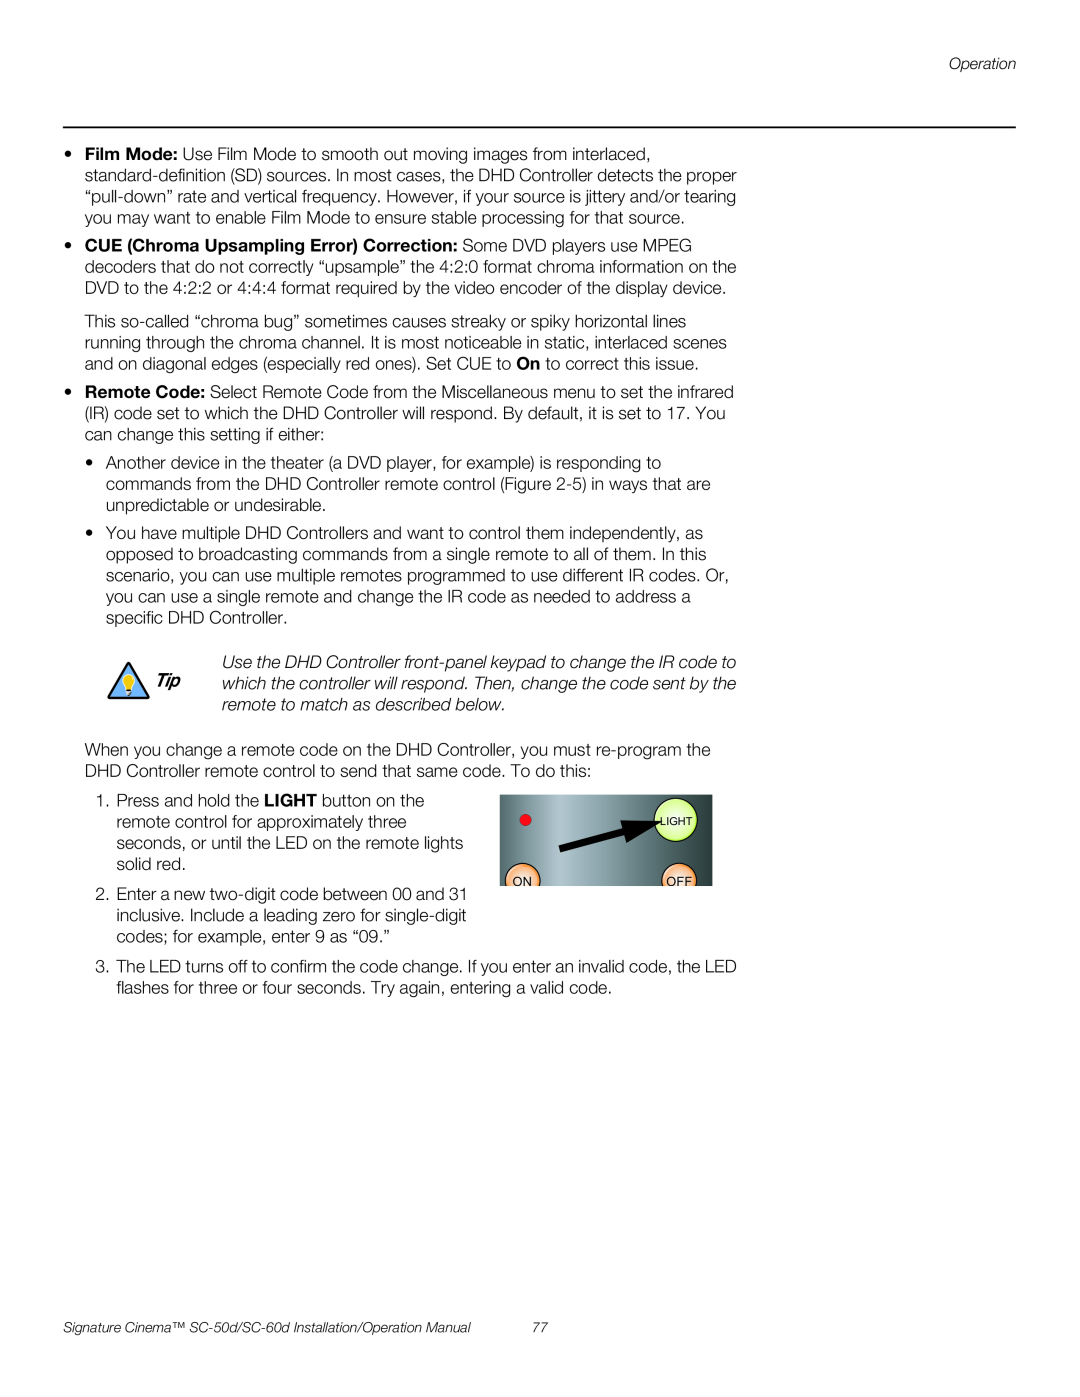 Runco SC-50D, SC-60D operation manual remote to match as described below 